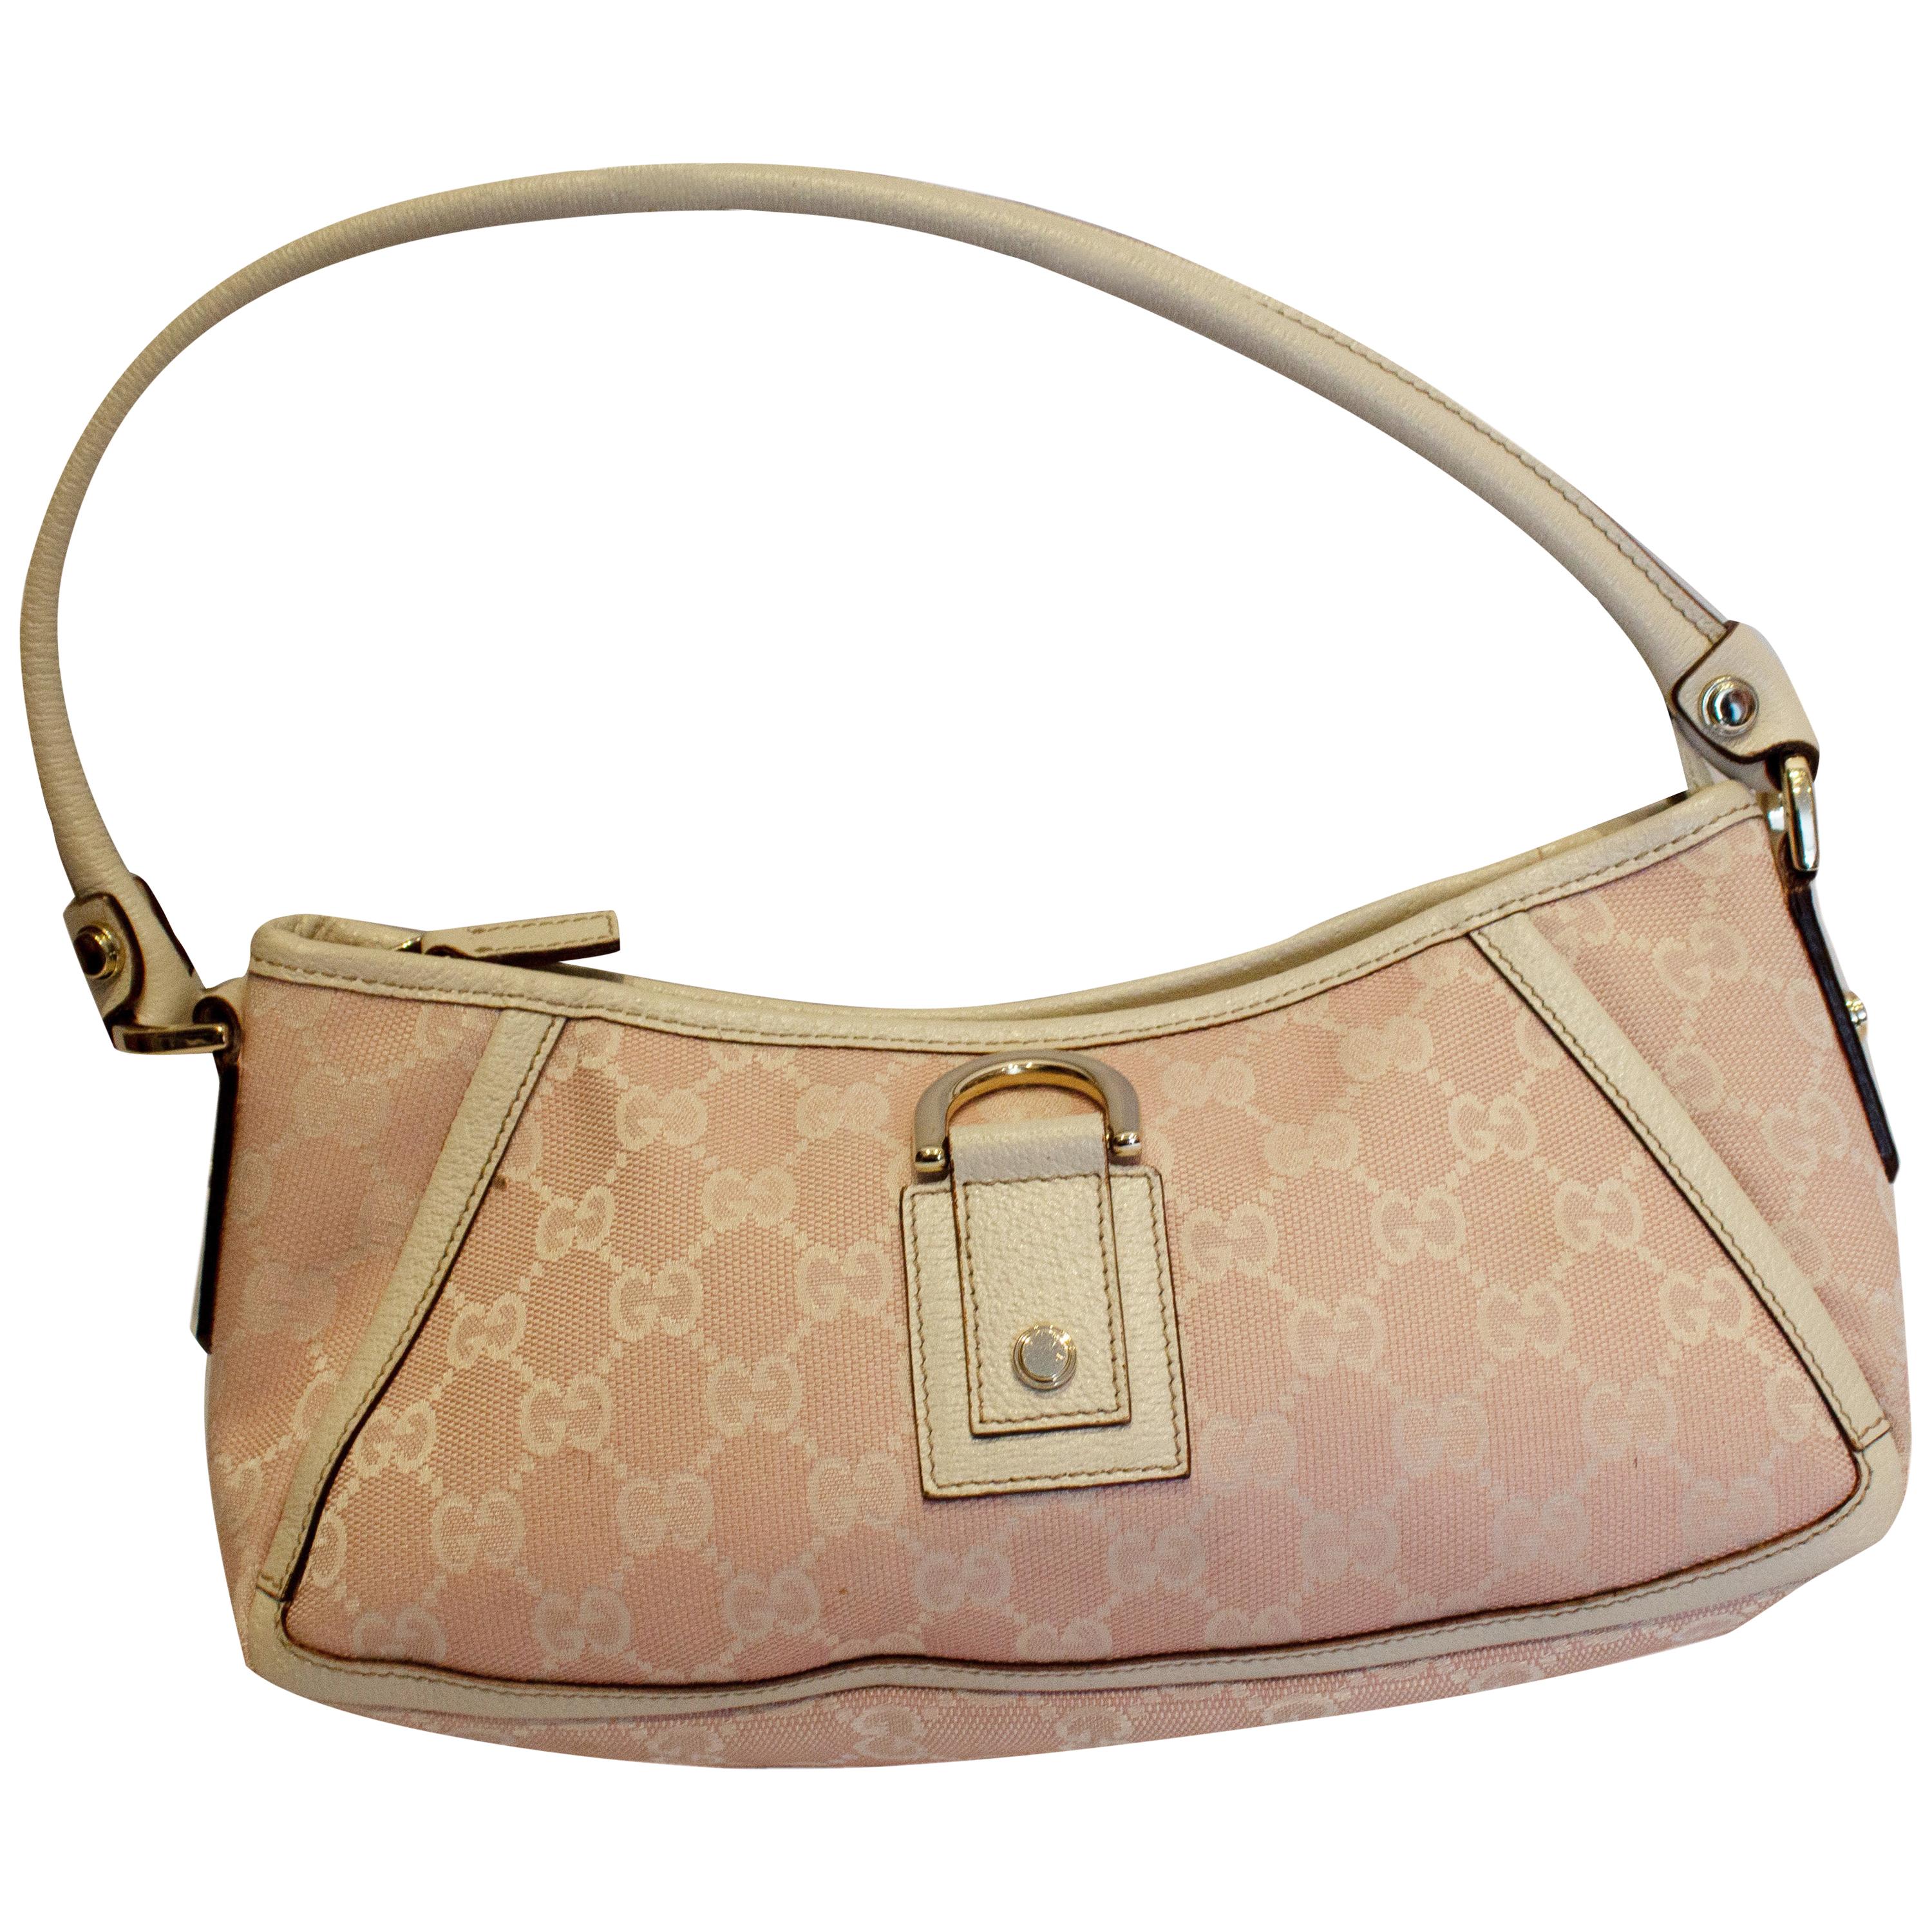 Pink and White Gucci Handbag